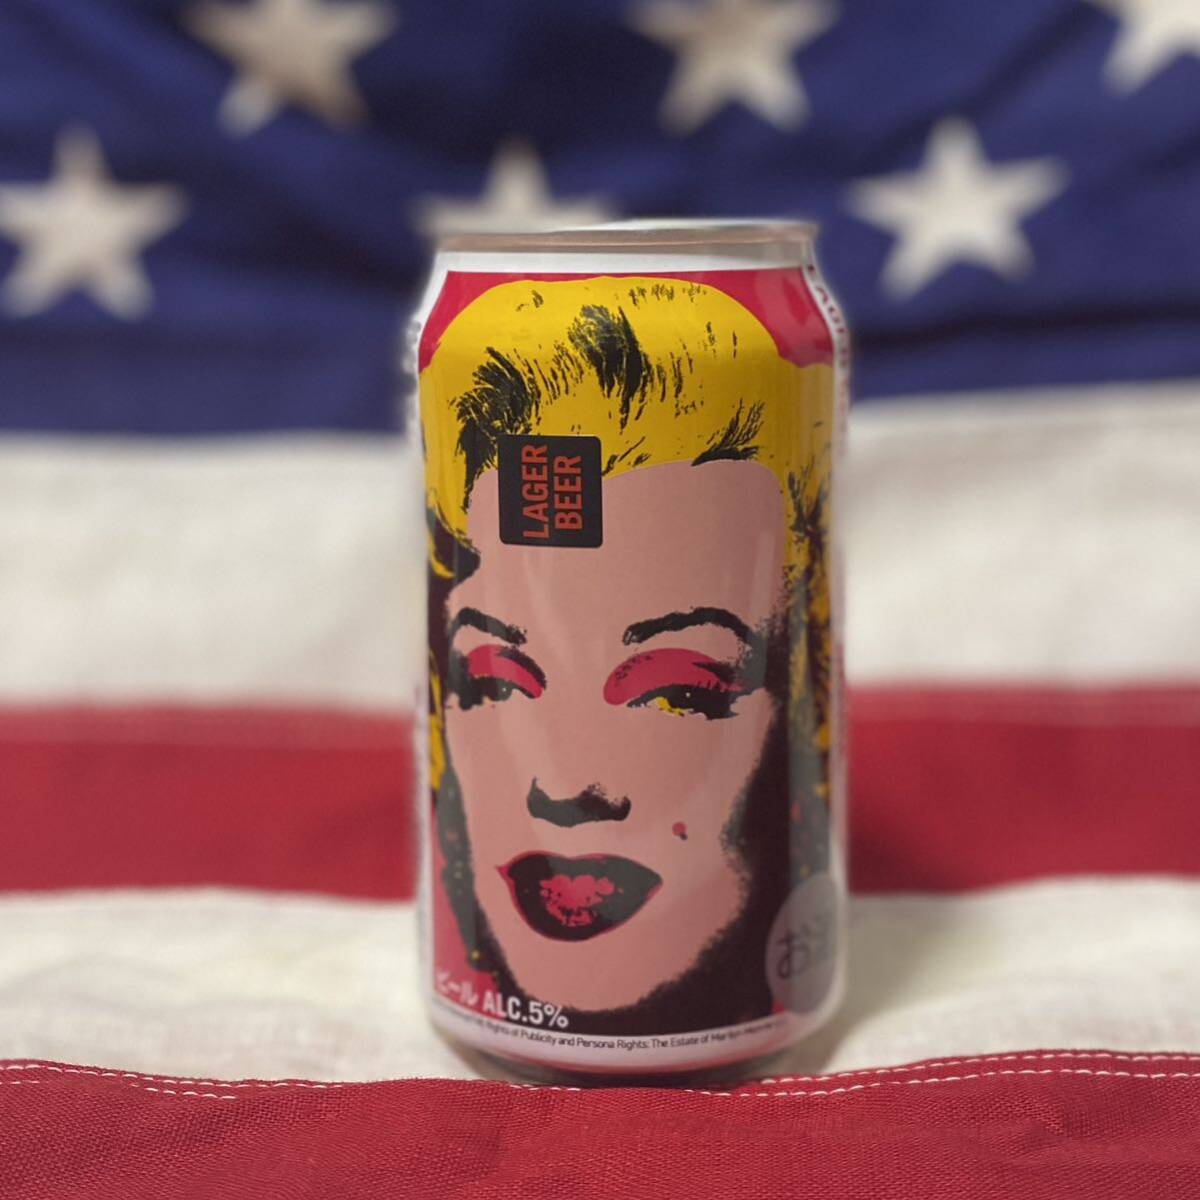  жираф Rugger пиво Anne ti* War ho ru дизайн упаковка Marilyn Monroe [A]